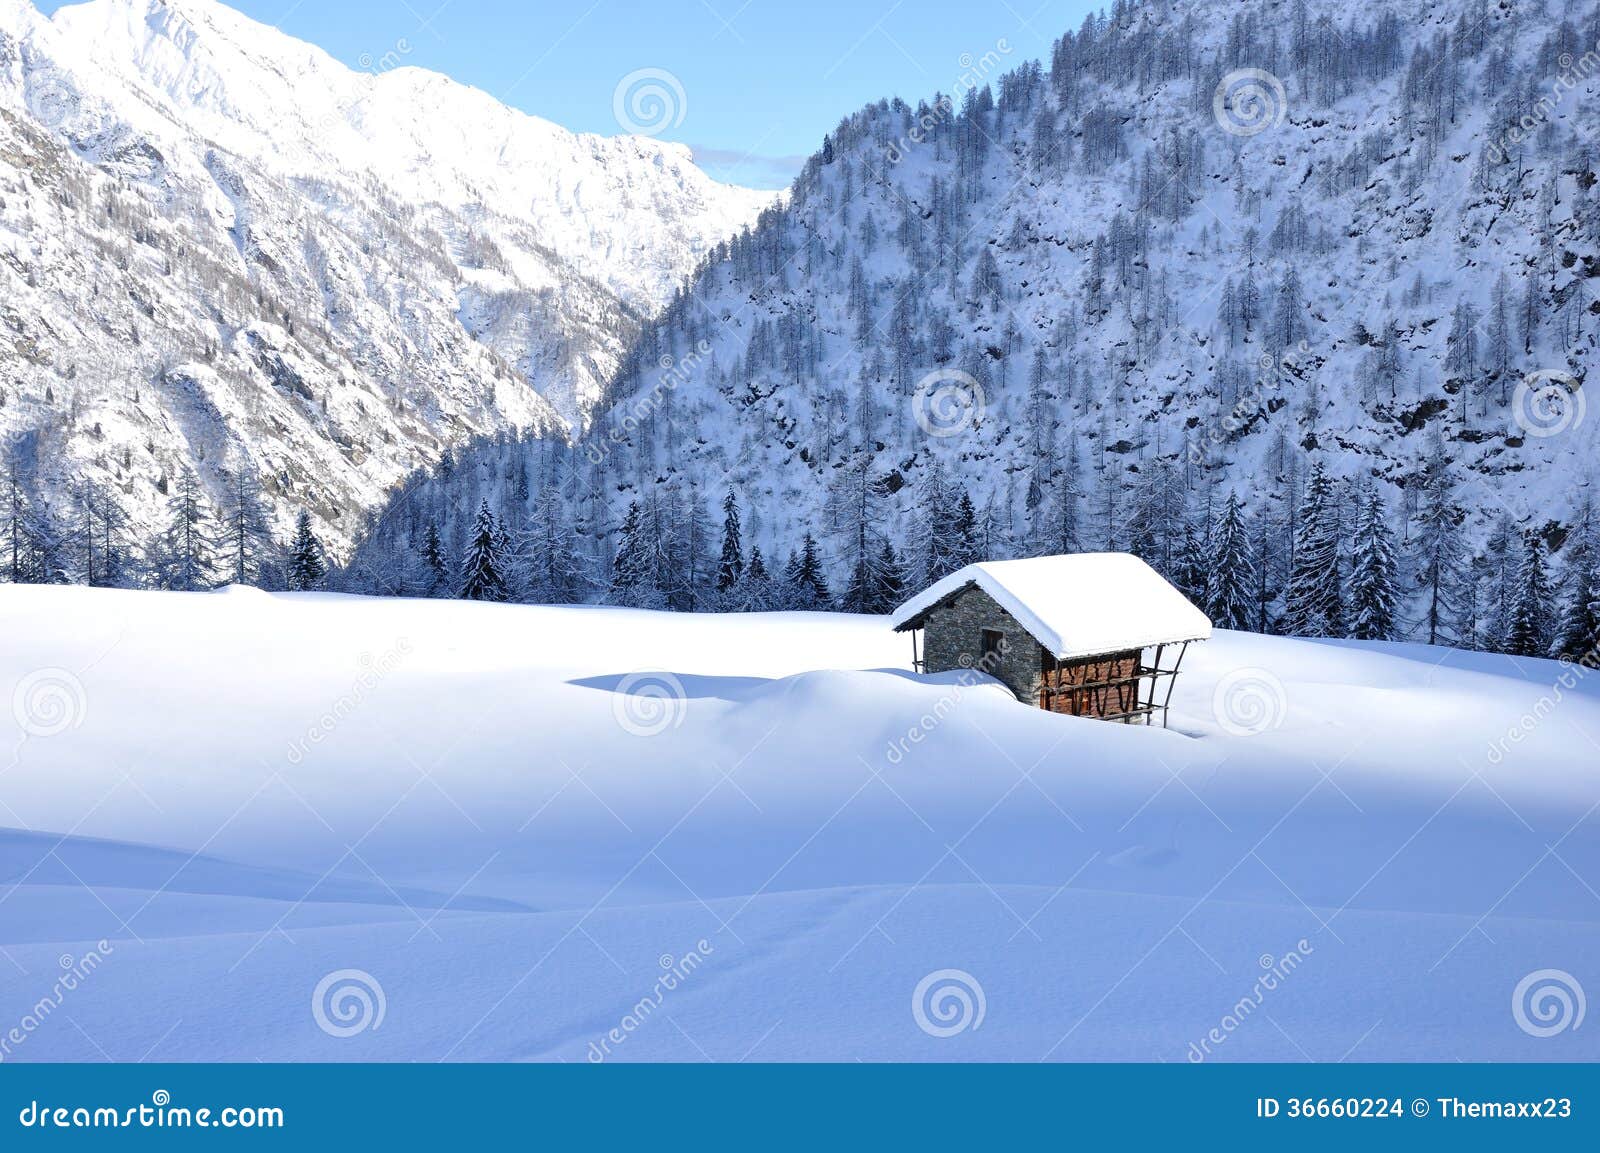 alps winter chalet 2